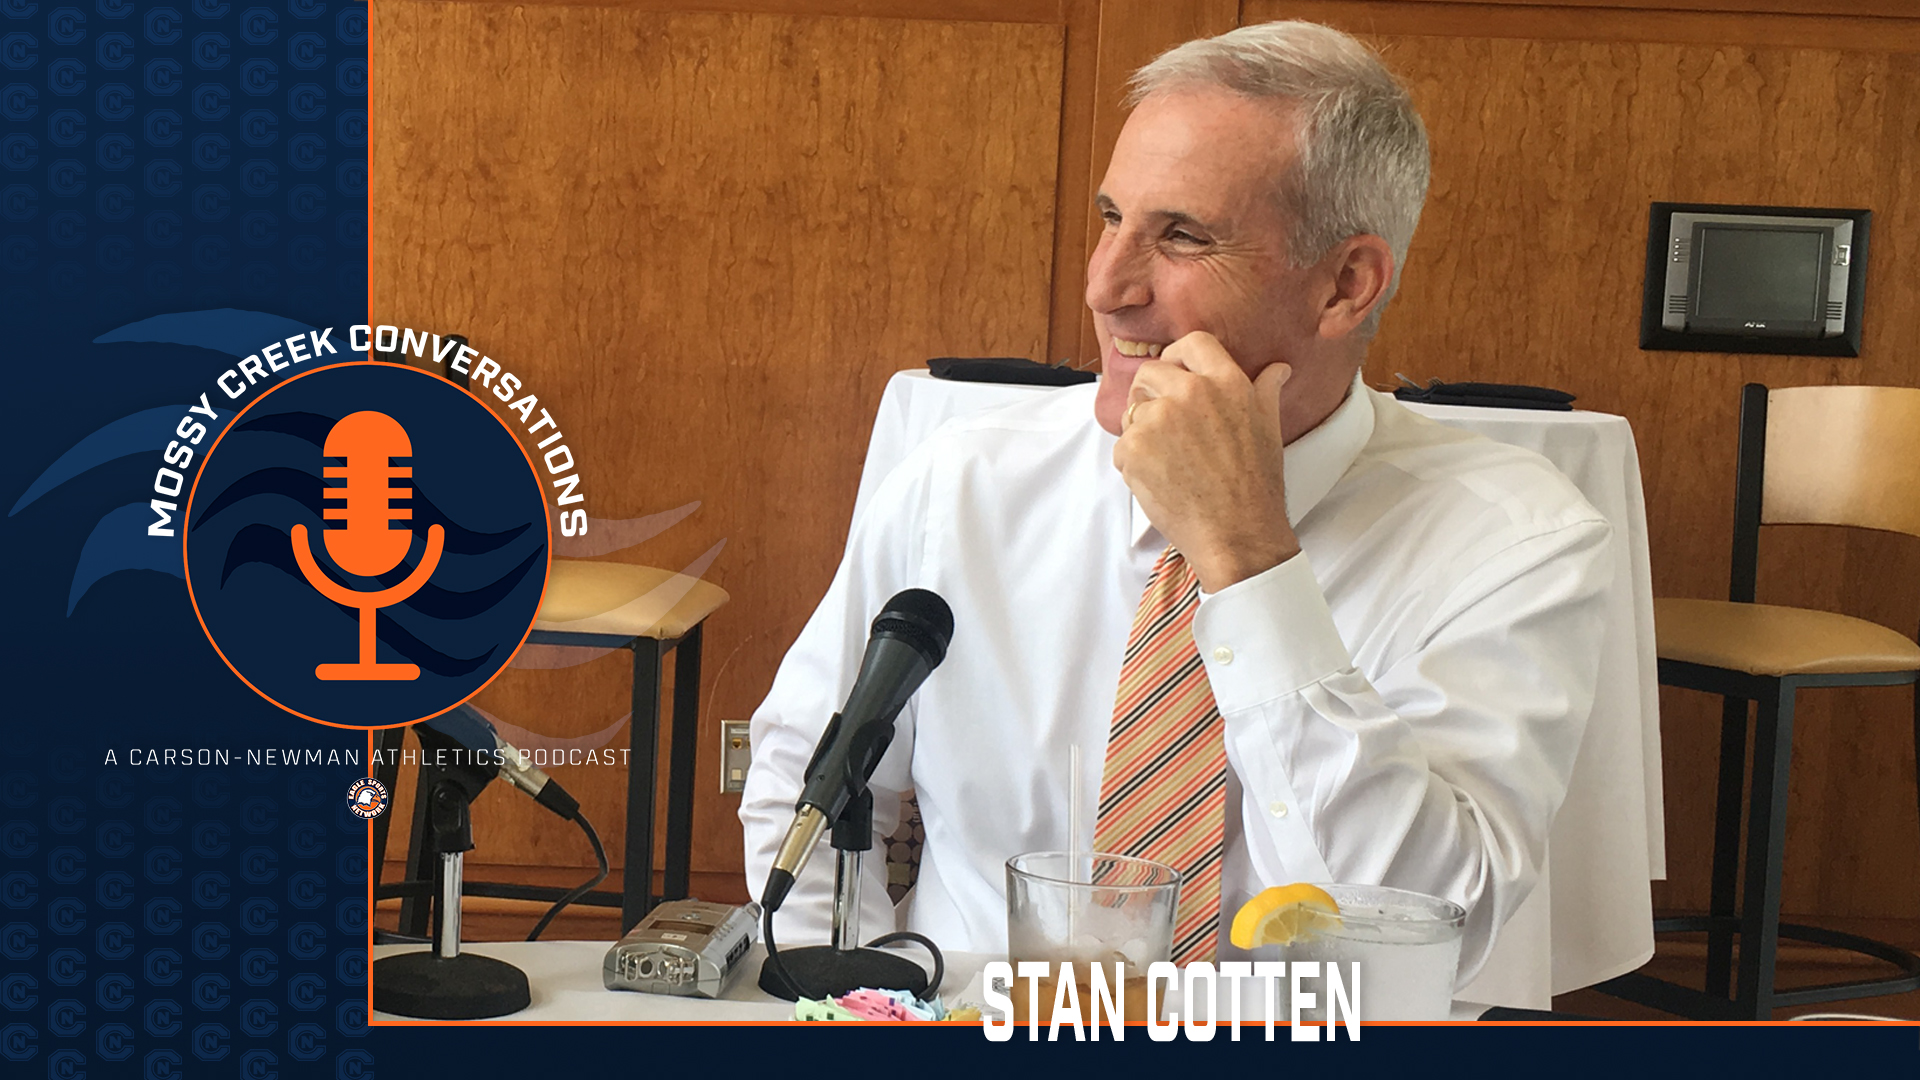 Legendary ESN broadcaster Stan Cotten reminisces on Mossy Creek Conversations